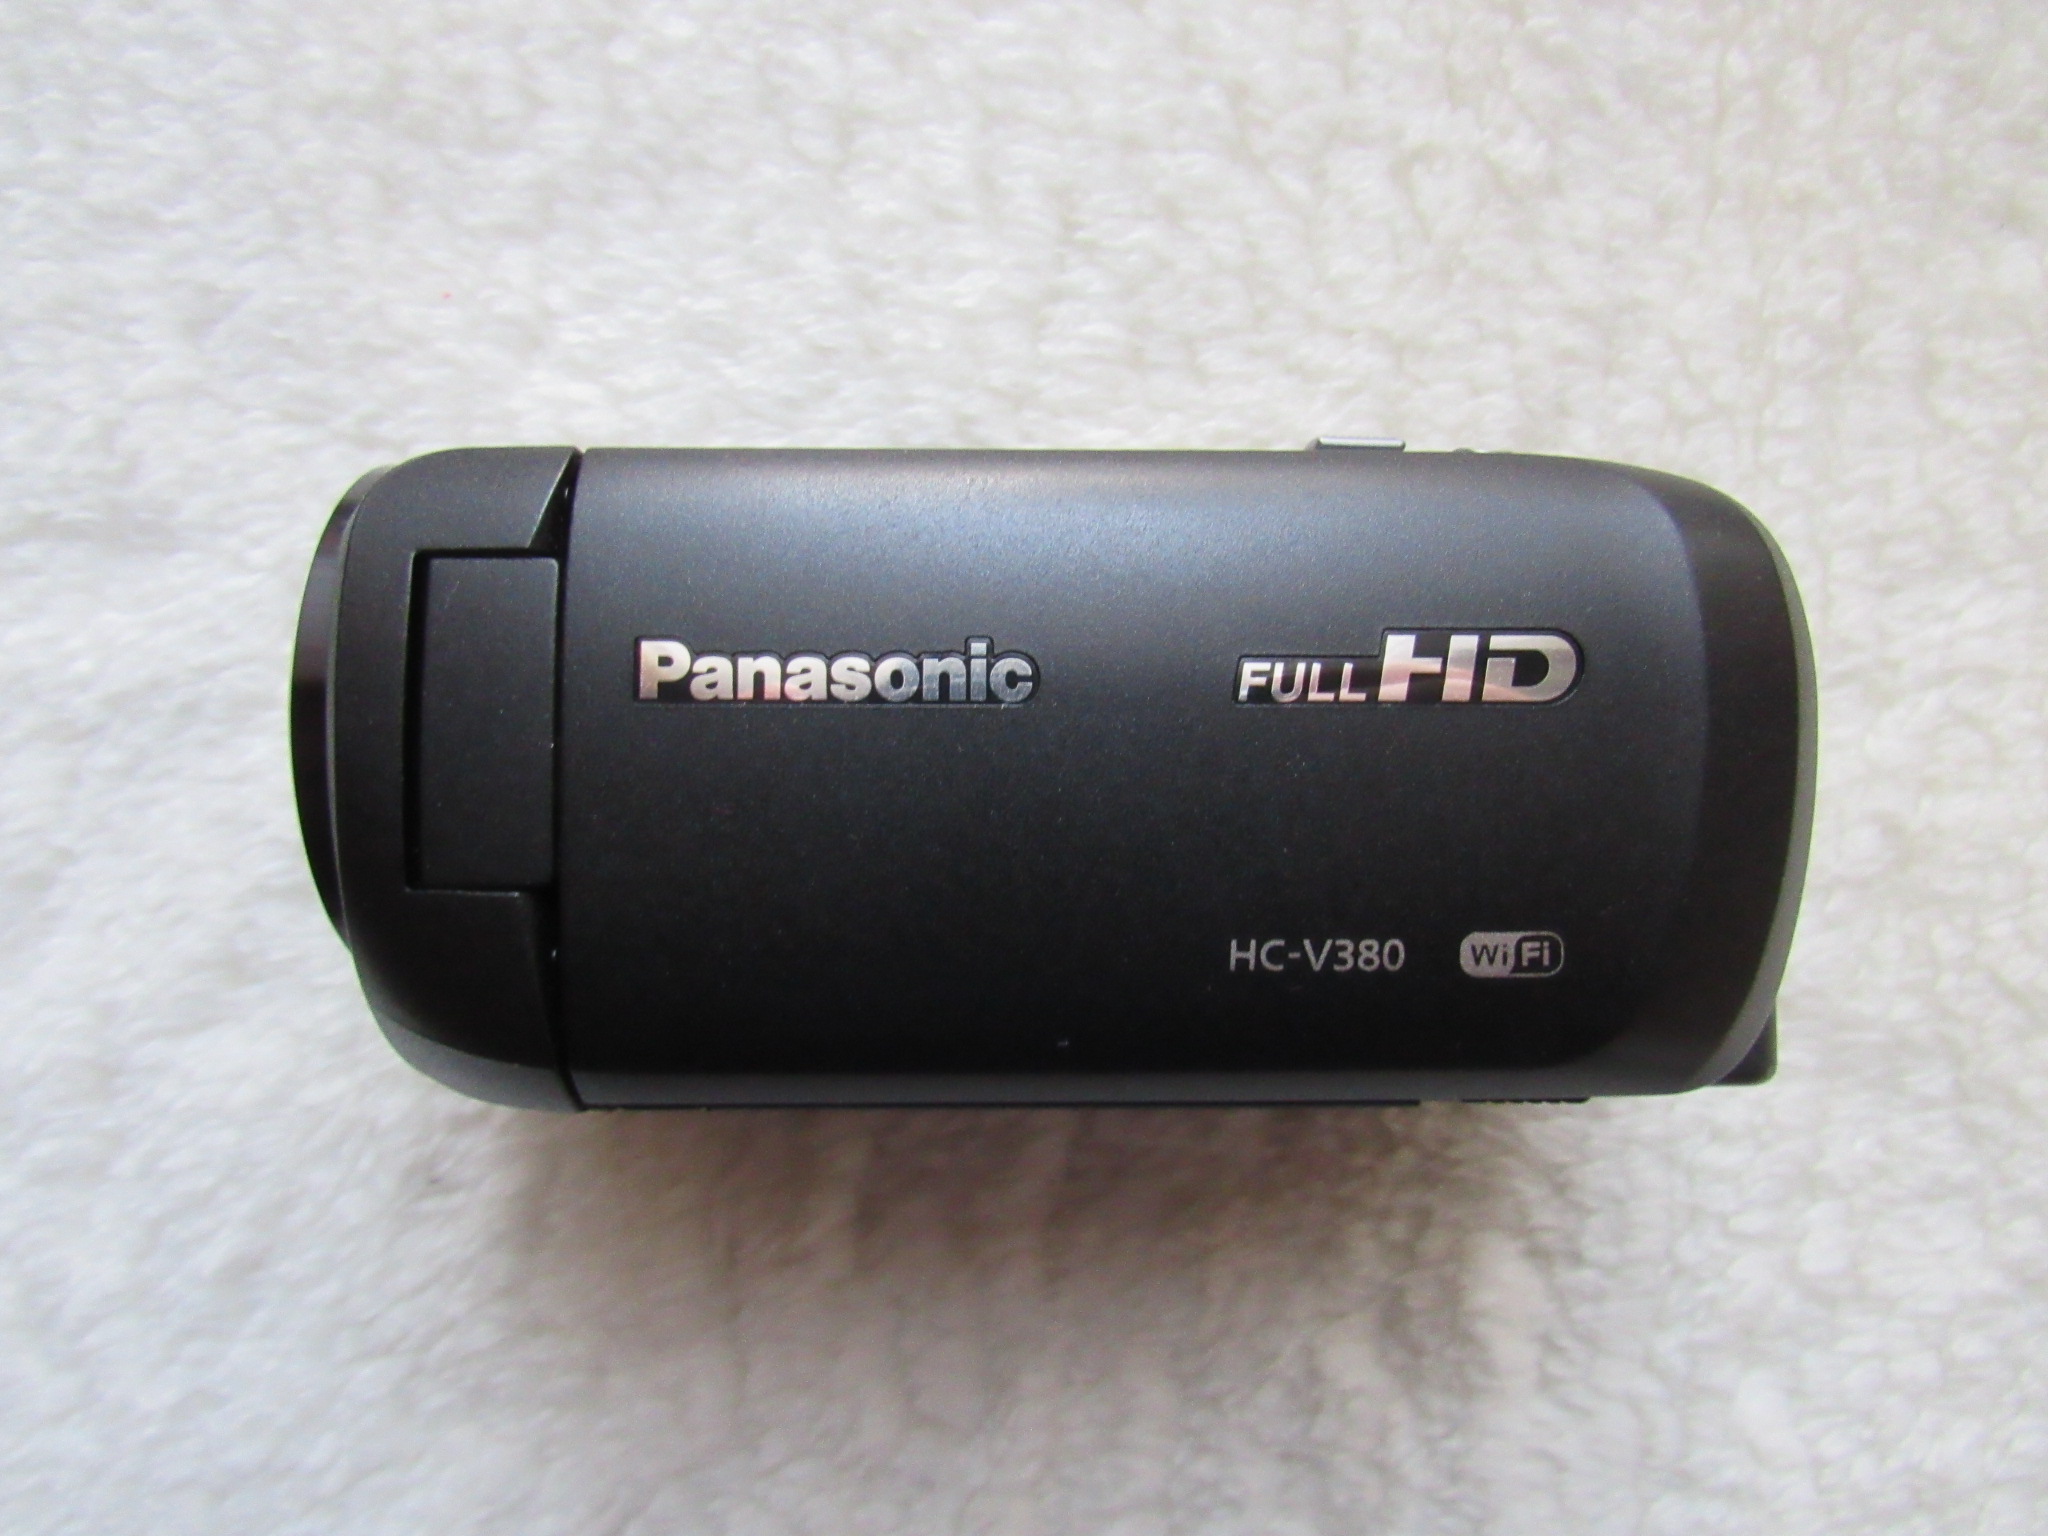 Mose tyngdekraft Mikroprocessor Review on Panasonic HC-V380 Camcorder – Tiny Reviews